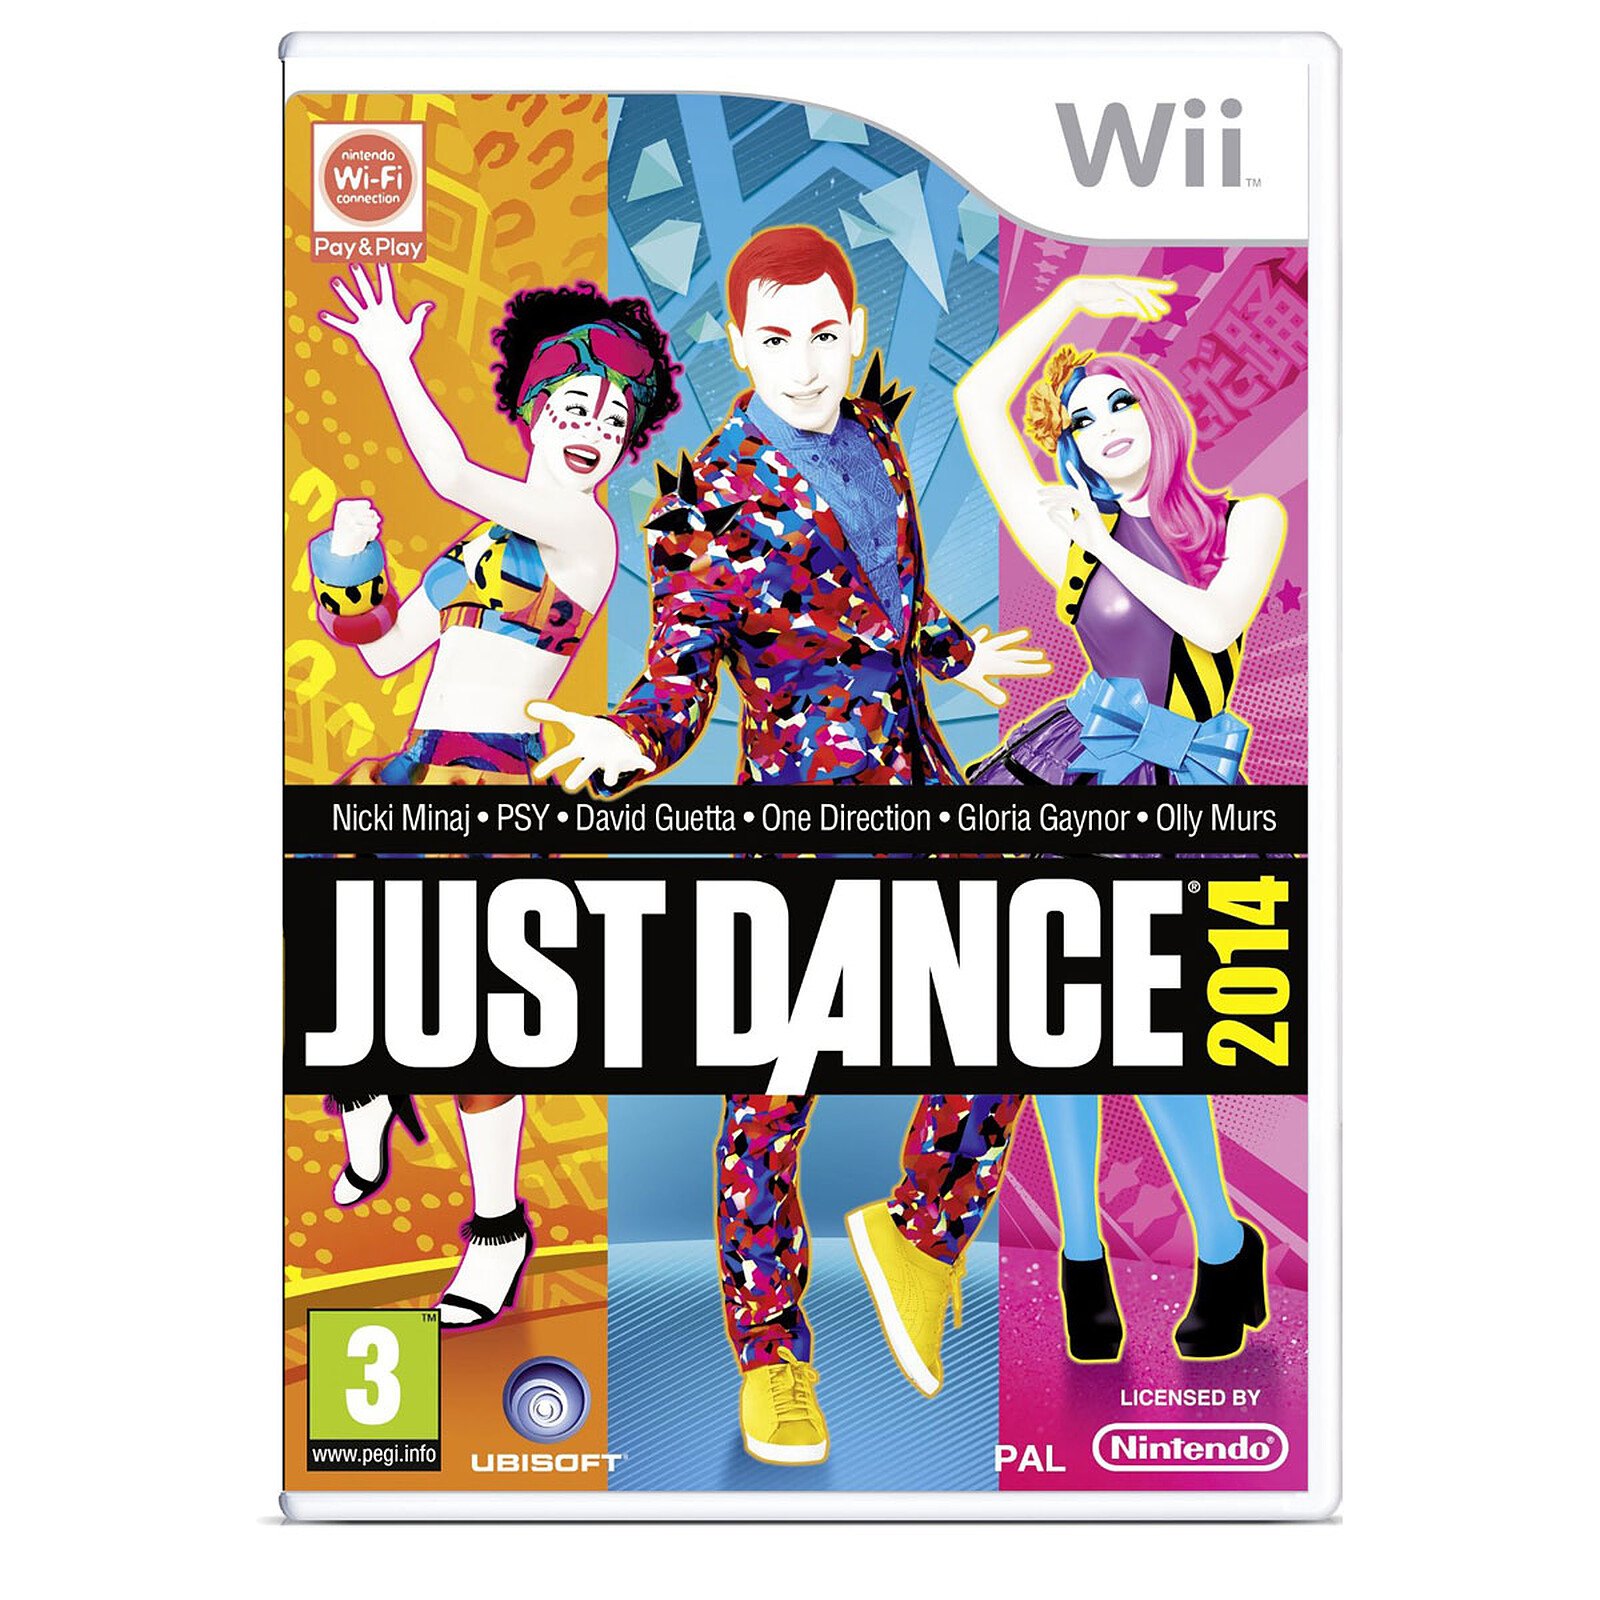 Игра just one. Xbox 360 Kinect just Dance. Джаст дэнс на ПС 4. Just Dance Xbox 360. Кинект just Dance.